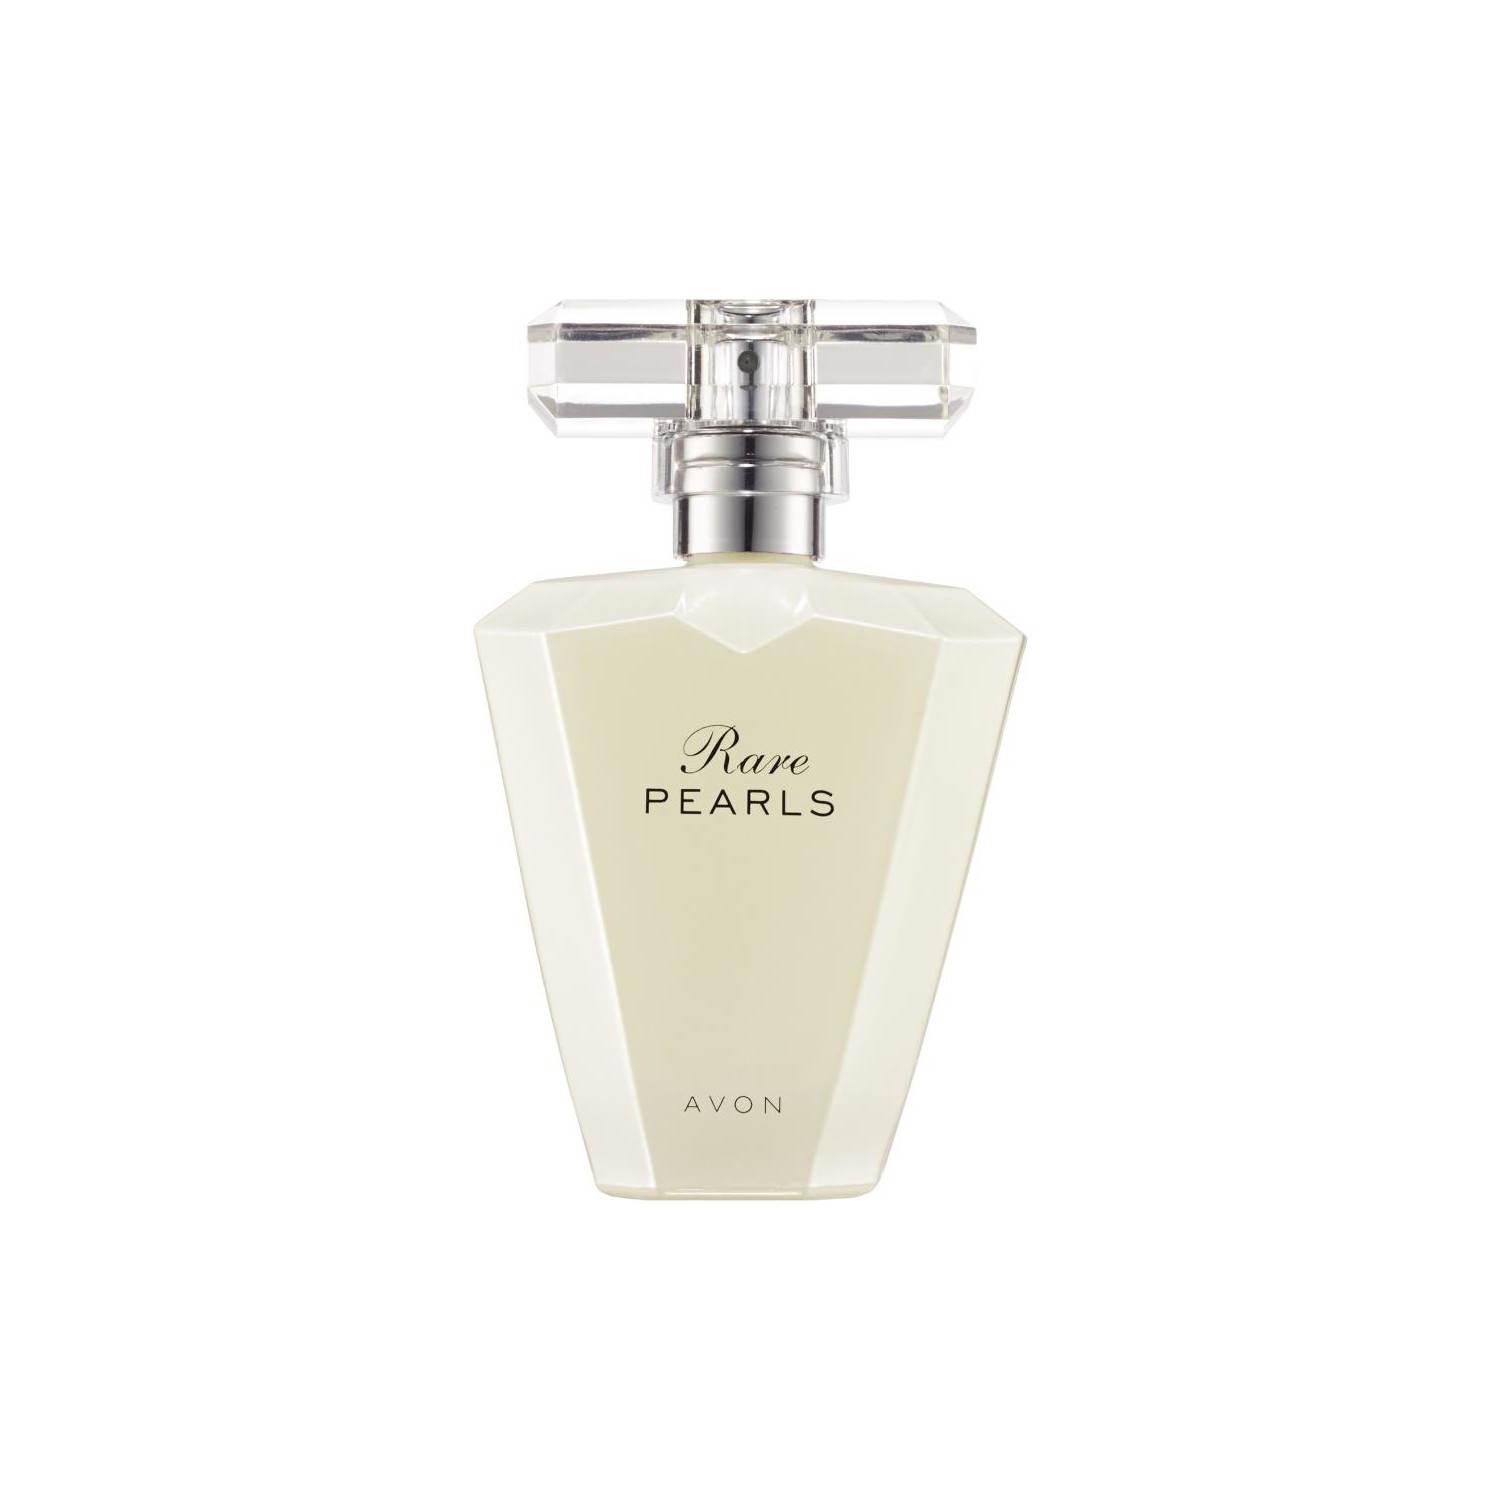 Rare Pearls parfum Avon 50ml